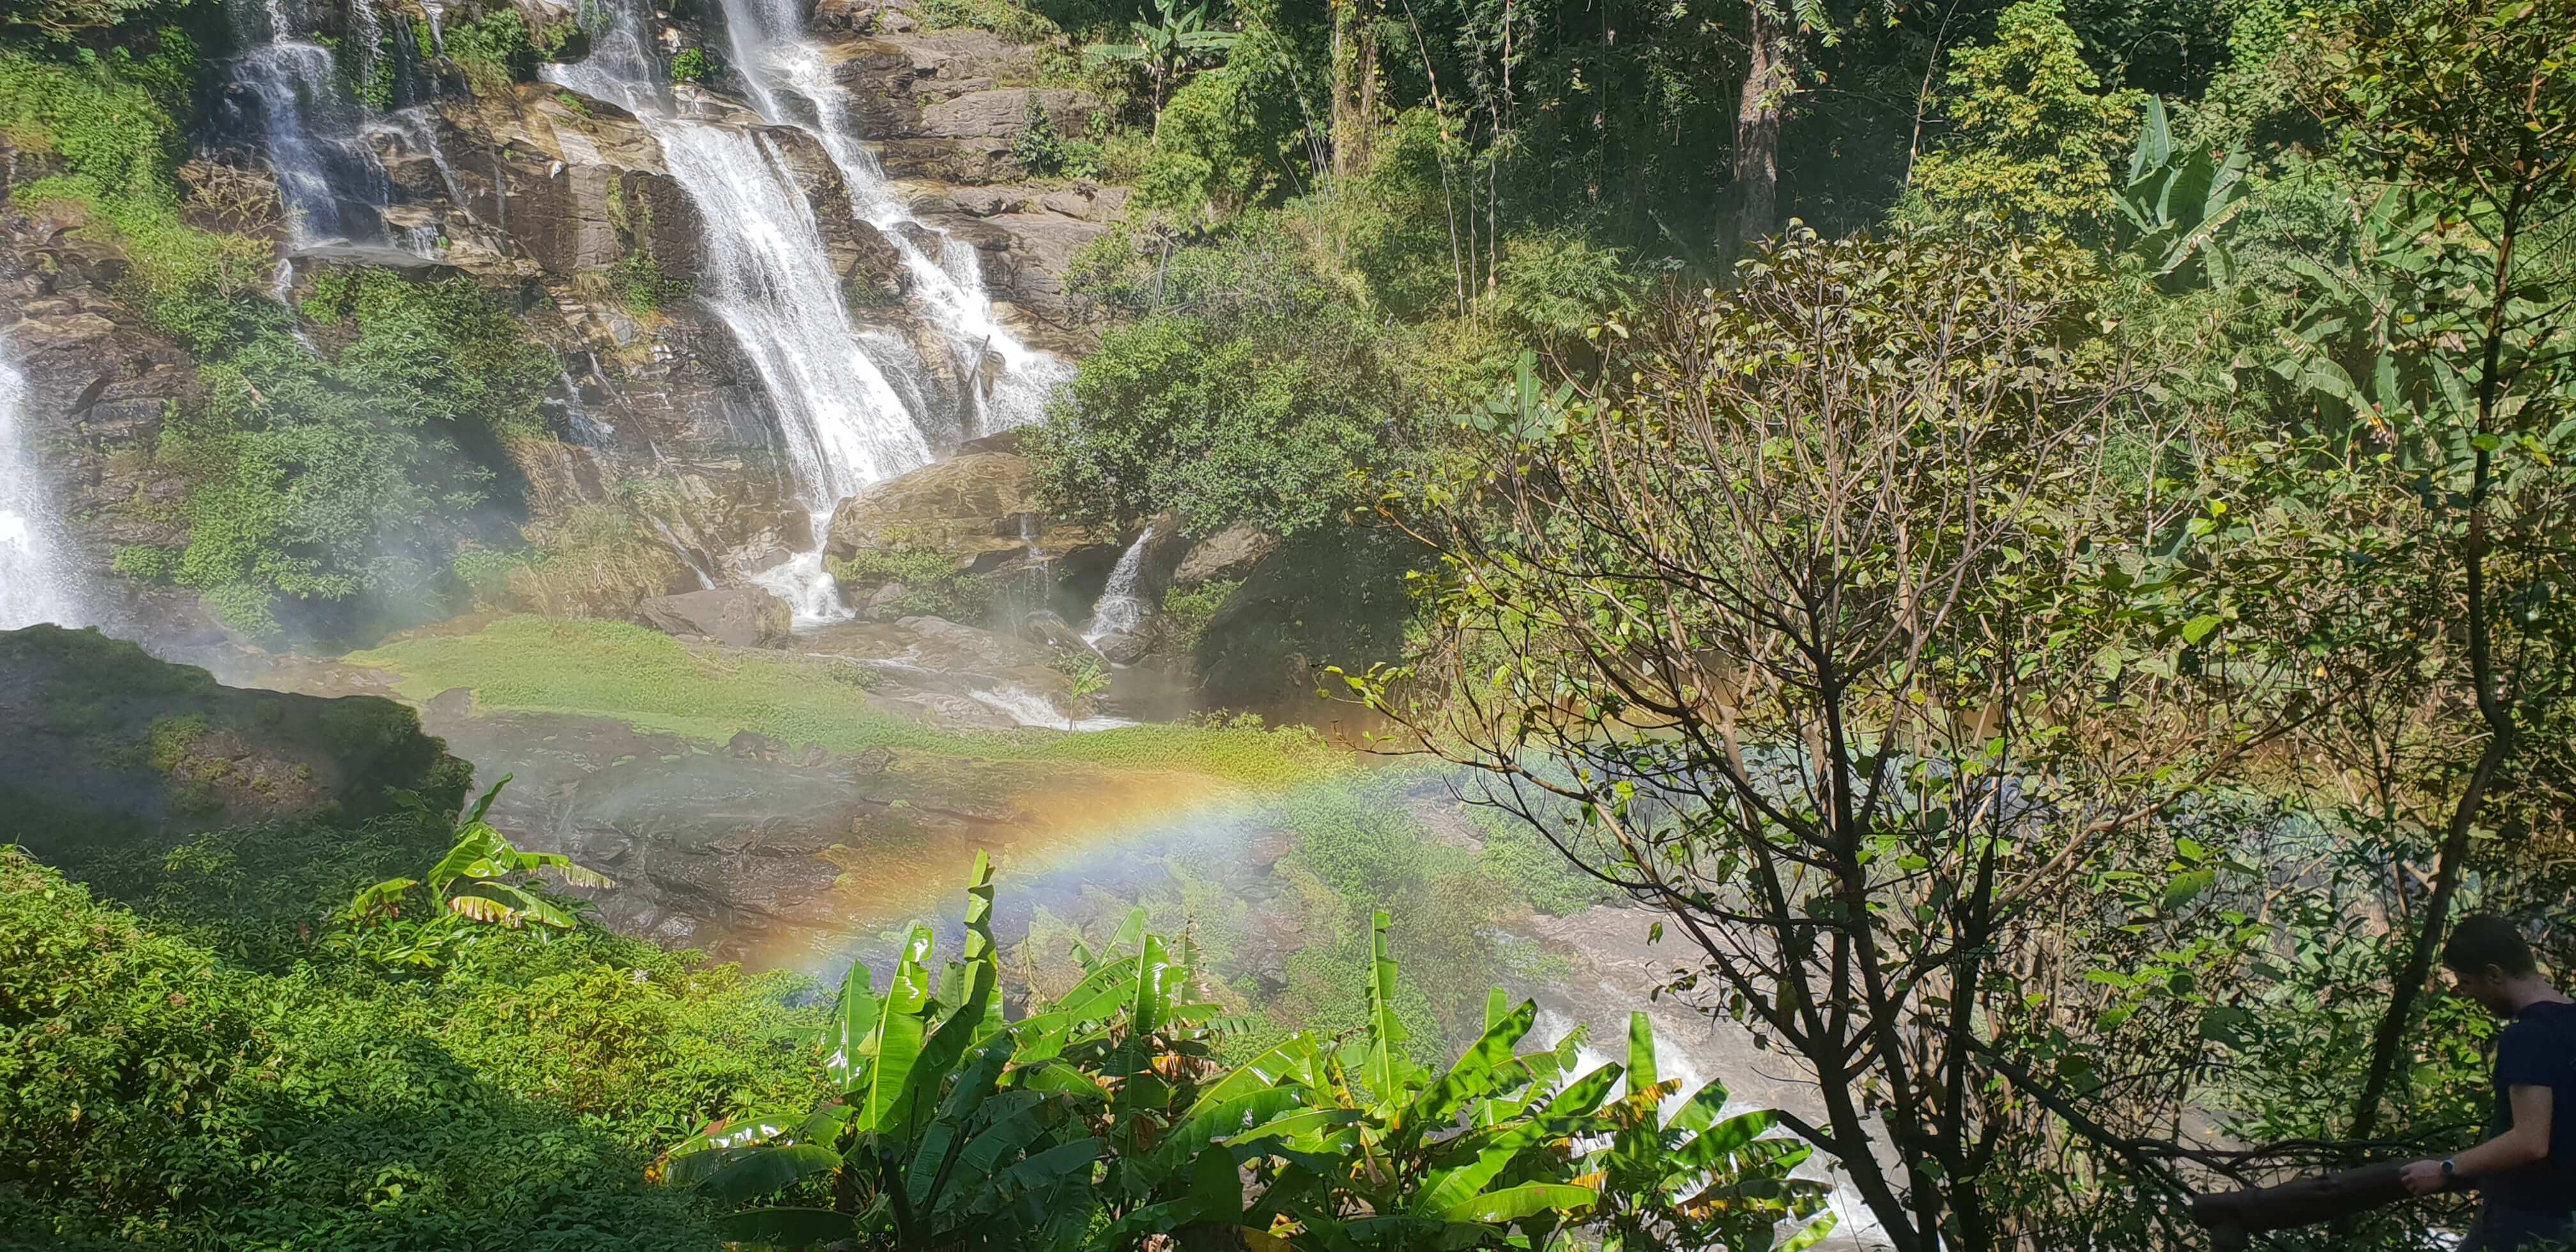 A surreal rainbow at the base of the Wachirathan waterfall